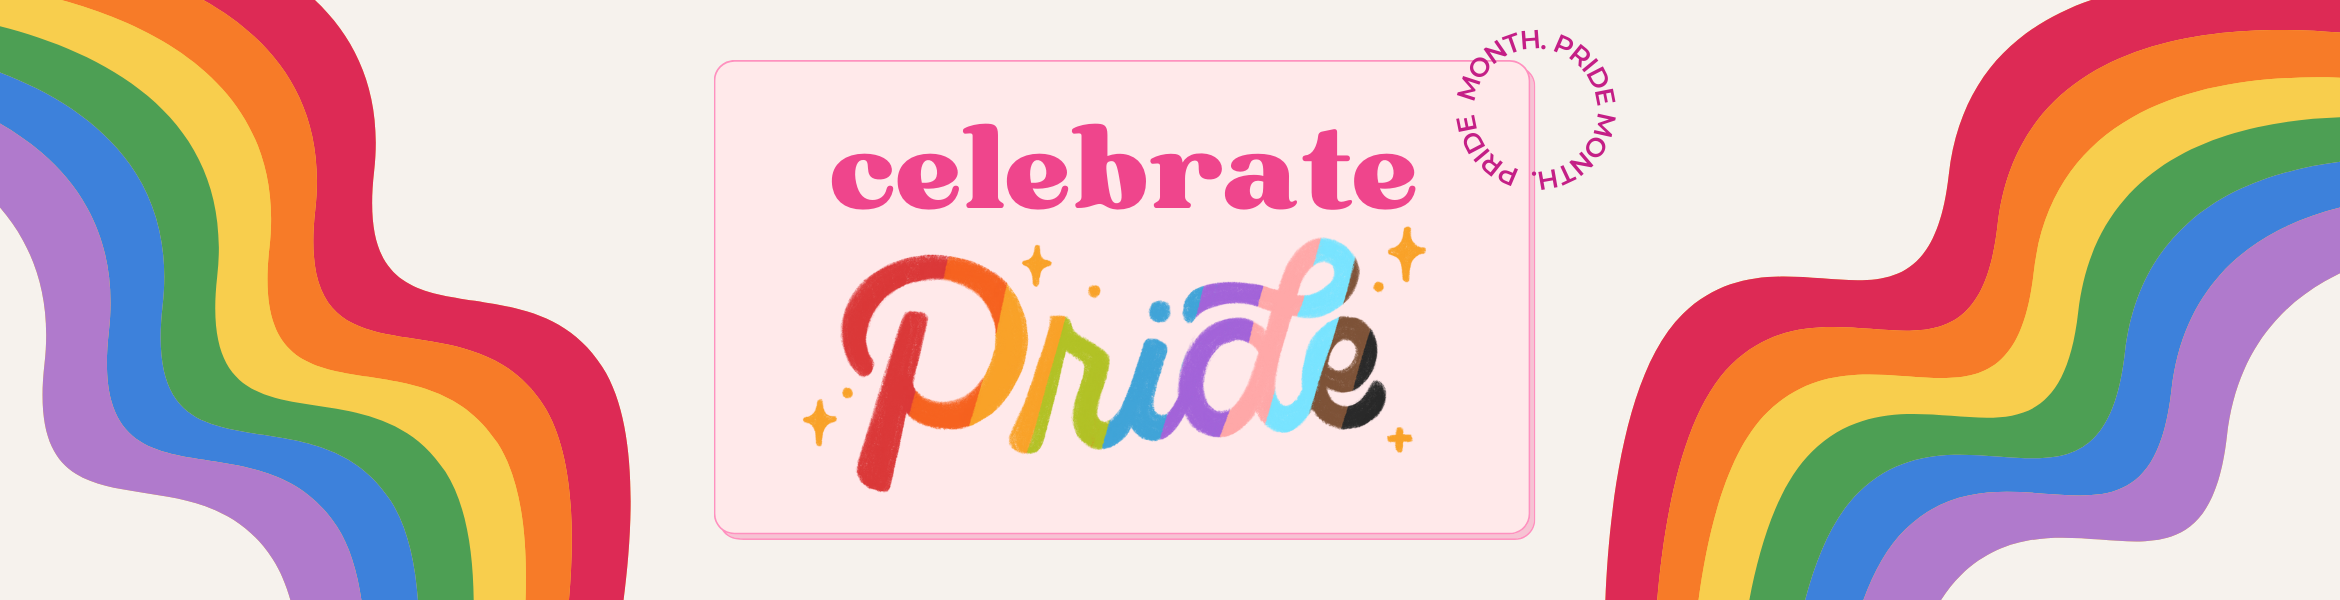 Celebrate Pride banner image